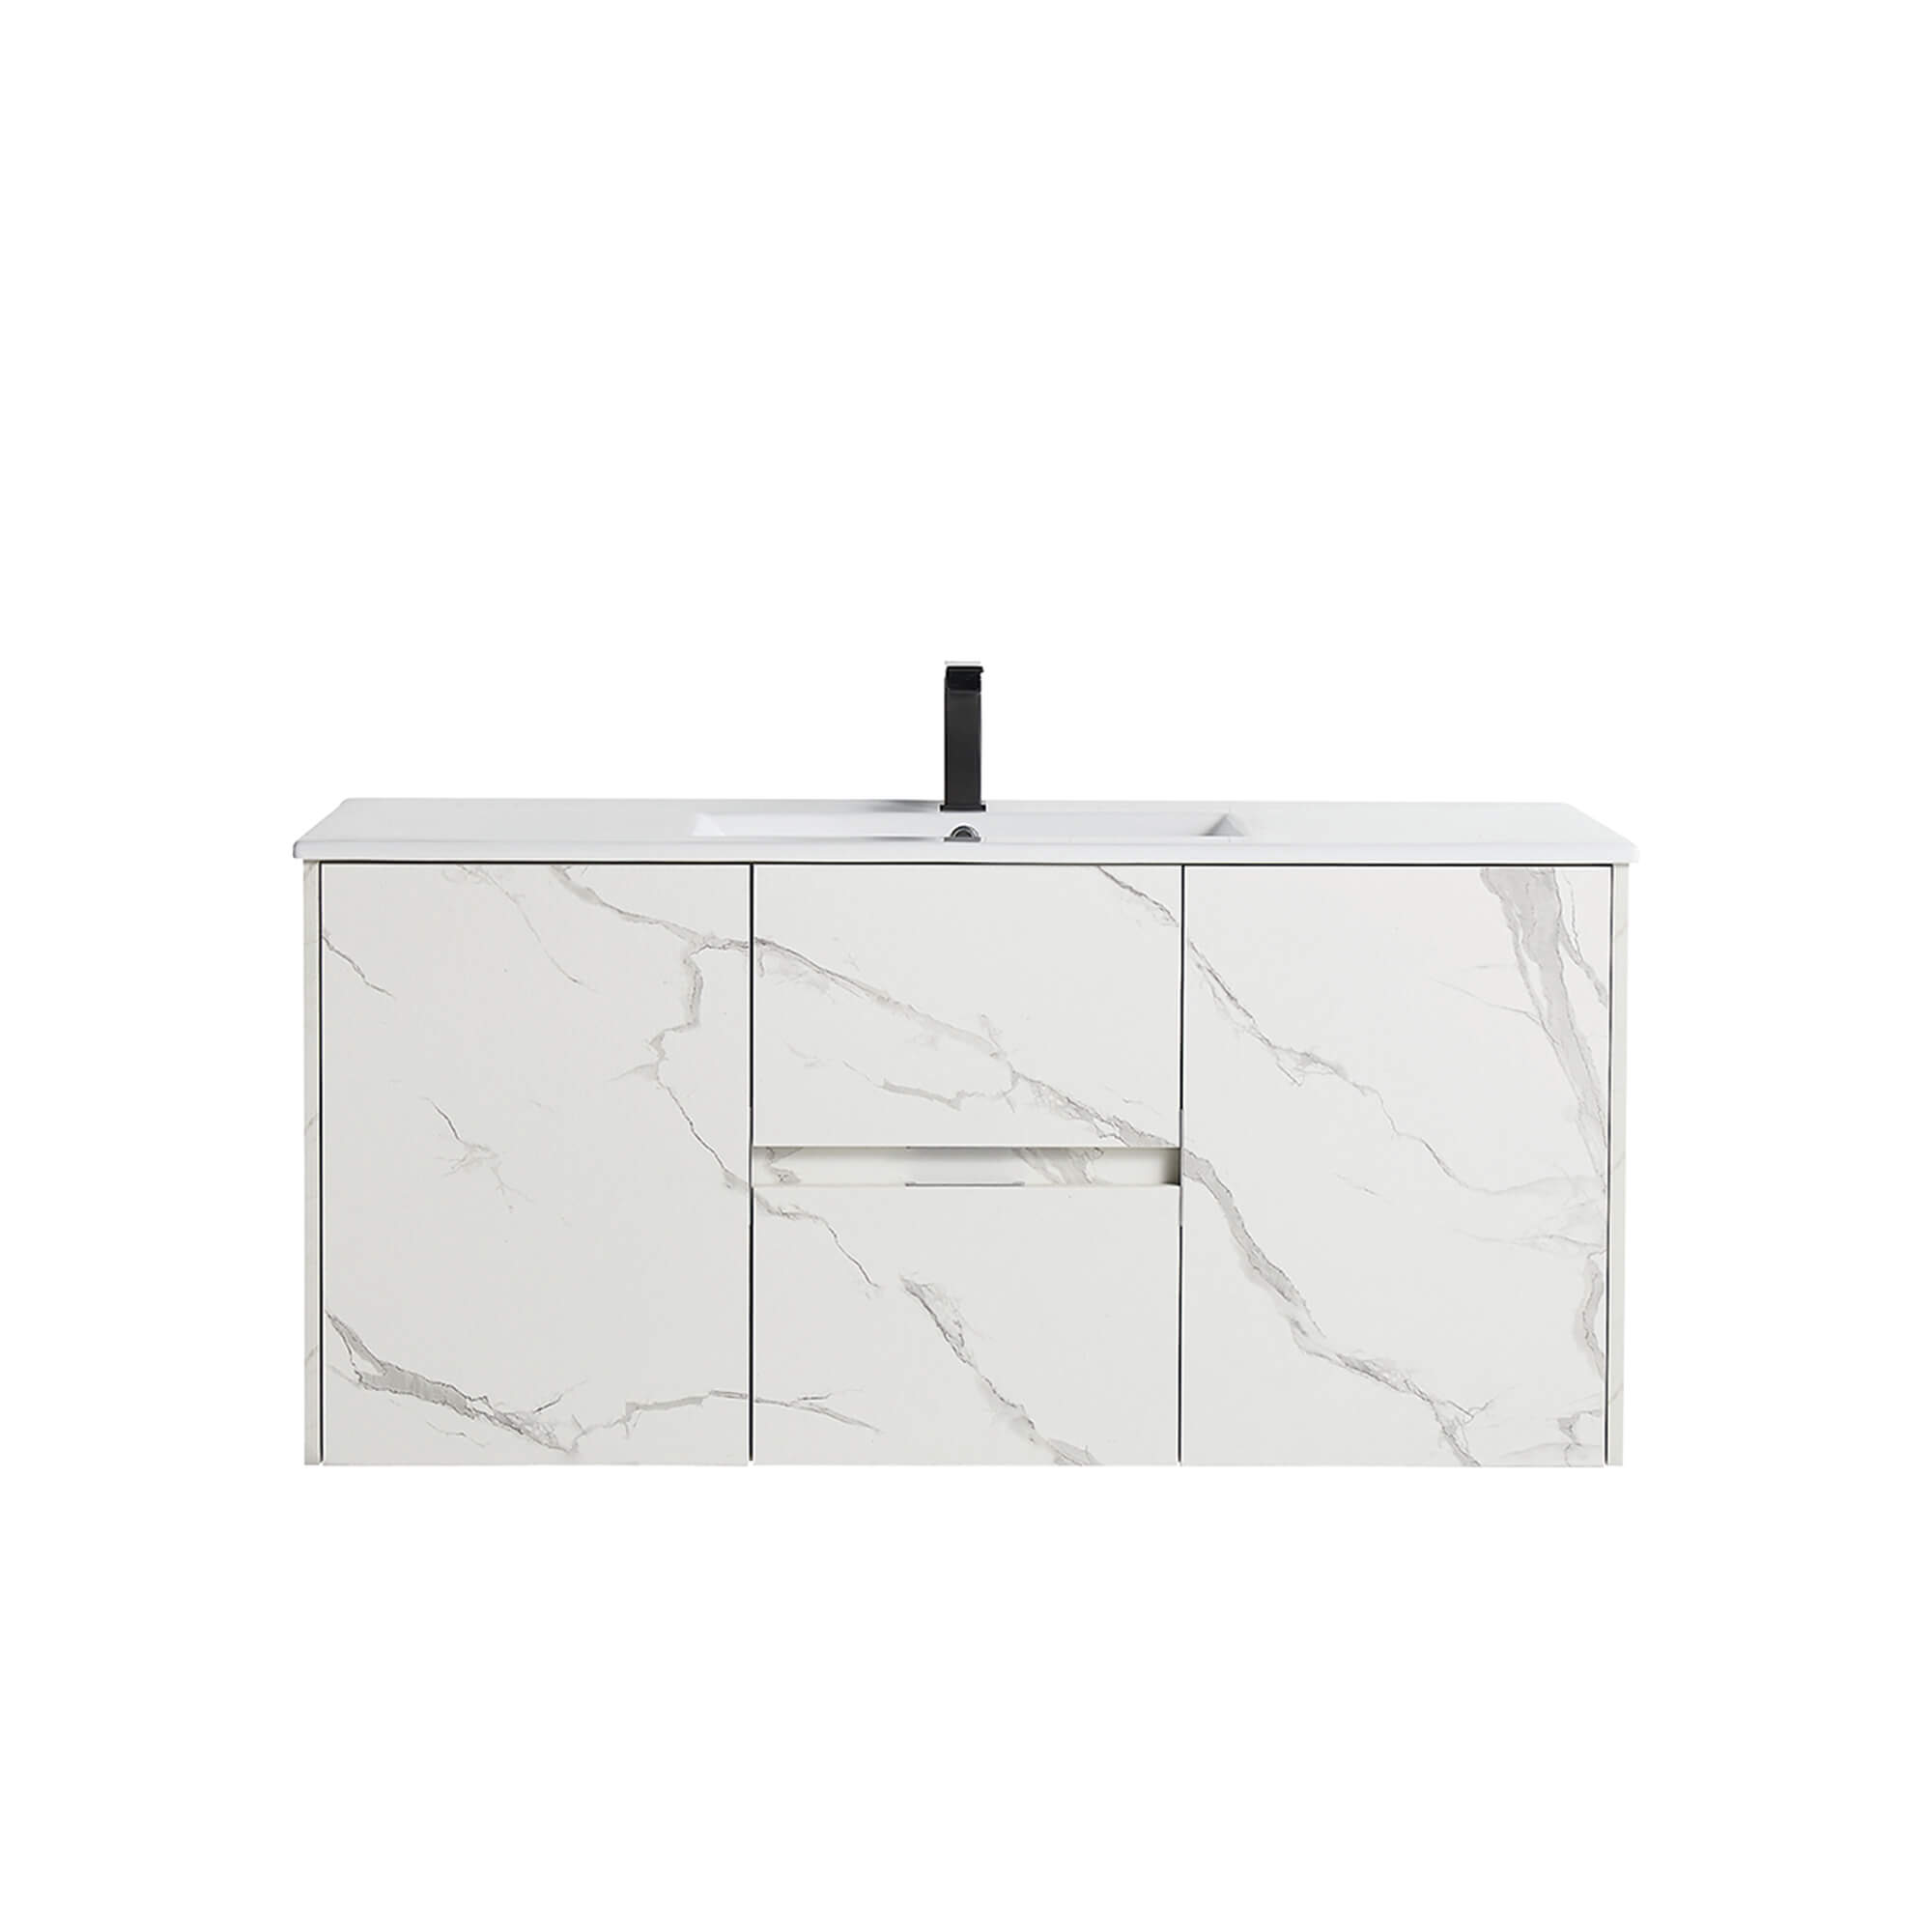 CASAINC 48-in Single Sink Bathroom Vanity in White Marble Grain with White Top-Casainc Canada